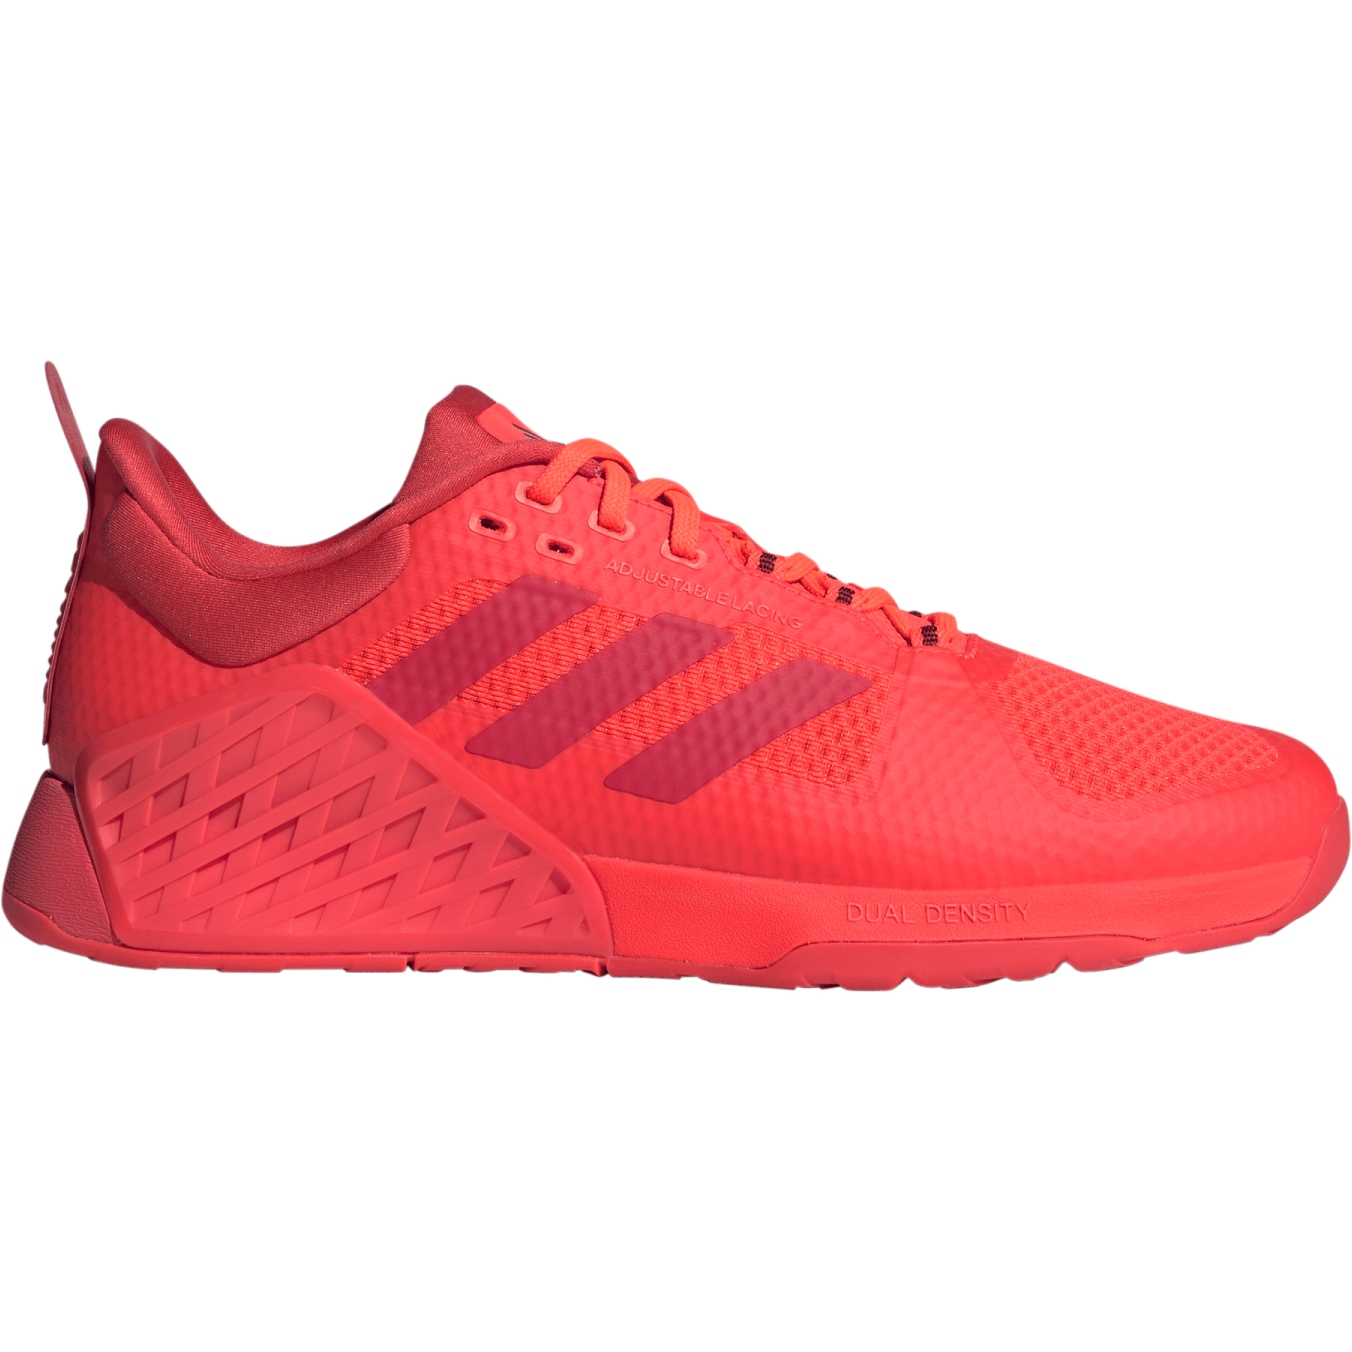 Productfoto van adidas Dropset 2 Trainer Fitness-Schoenen Heren - solar red/bright red/shadow red ID4955